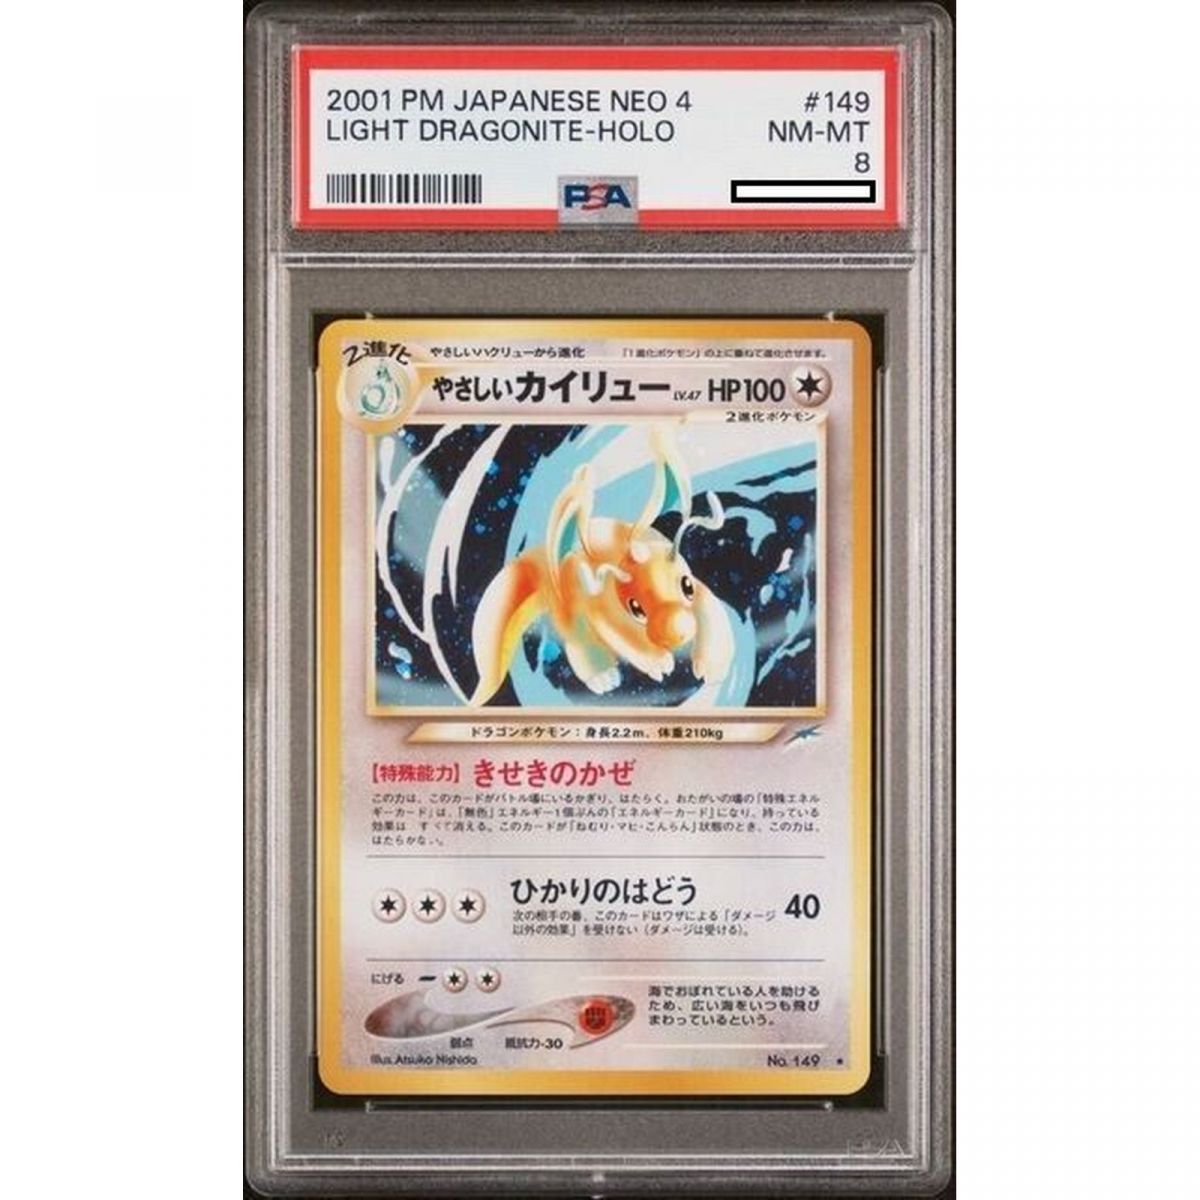 Item Pokémon - Graded Card - Light Dragonite Neo 4 Destiny Japanisch 2001 [PSA 8 - NM-MT]